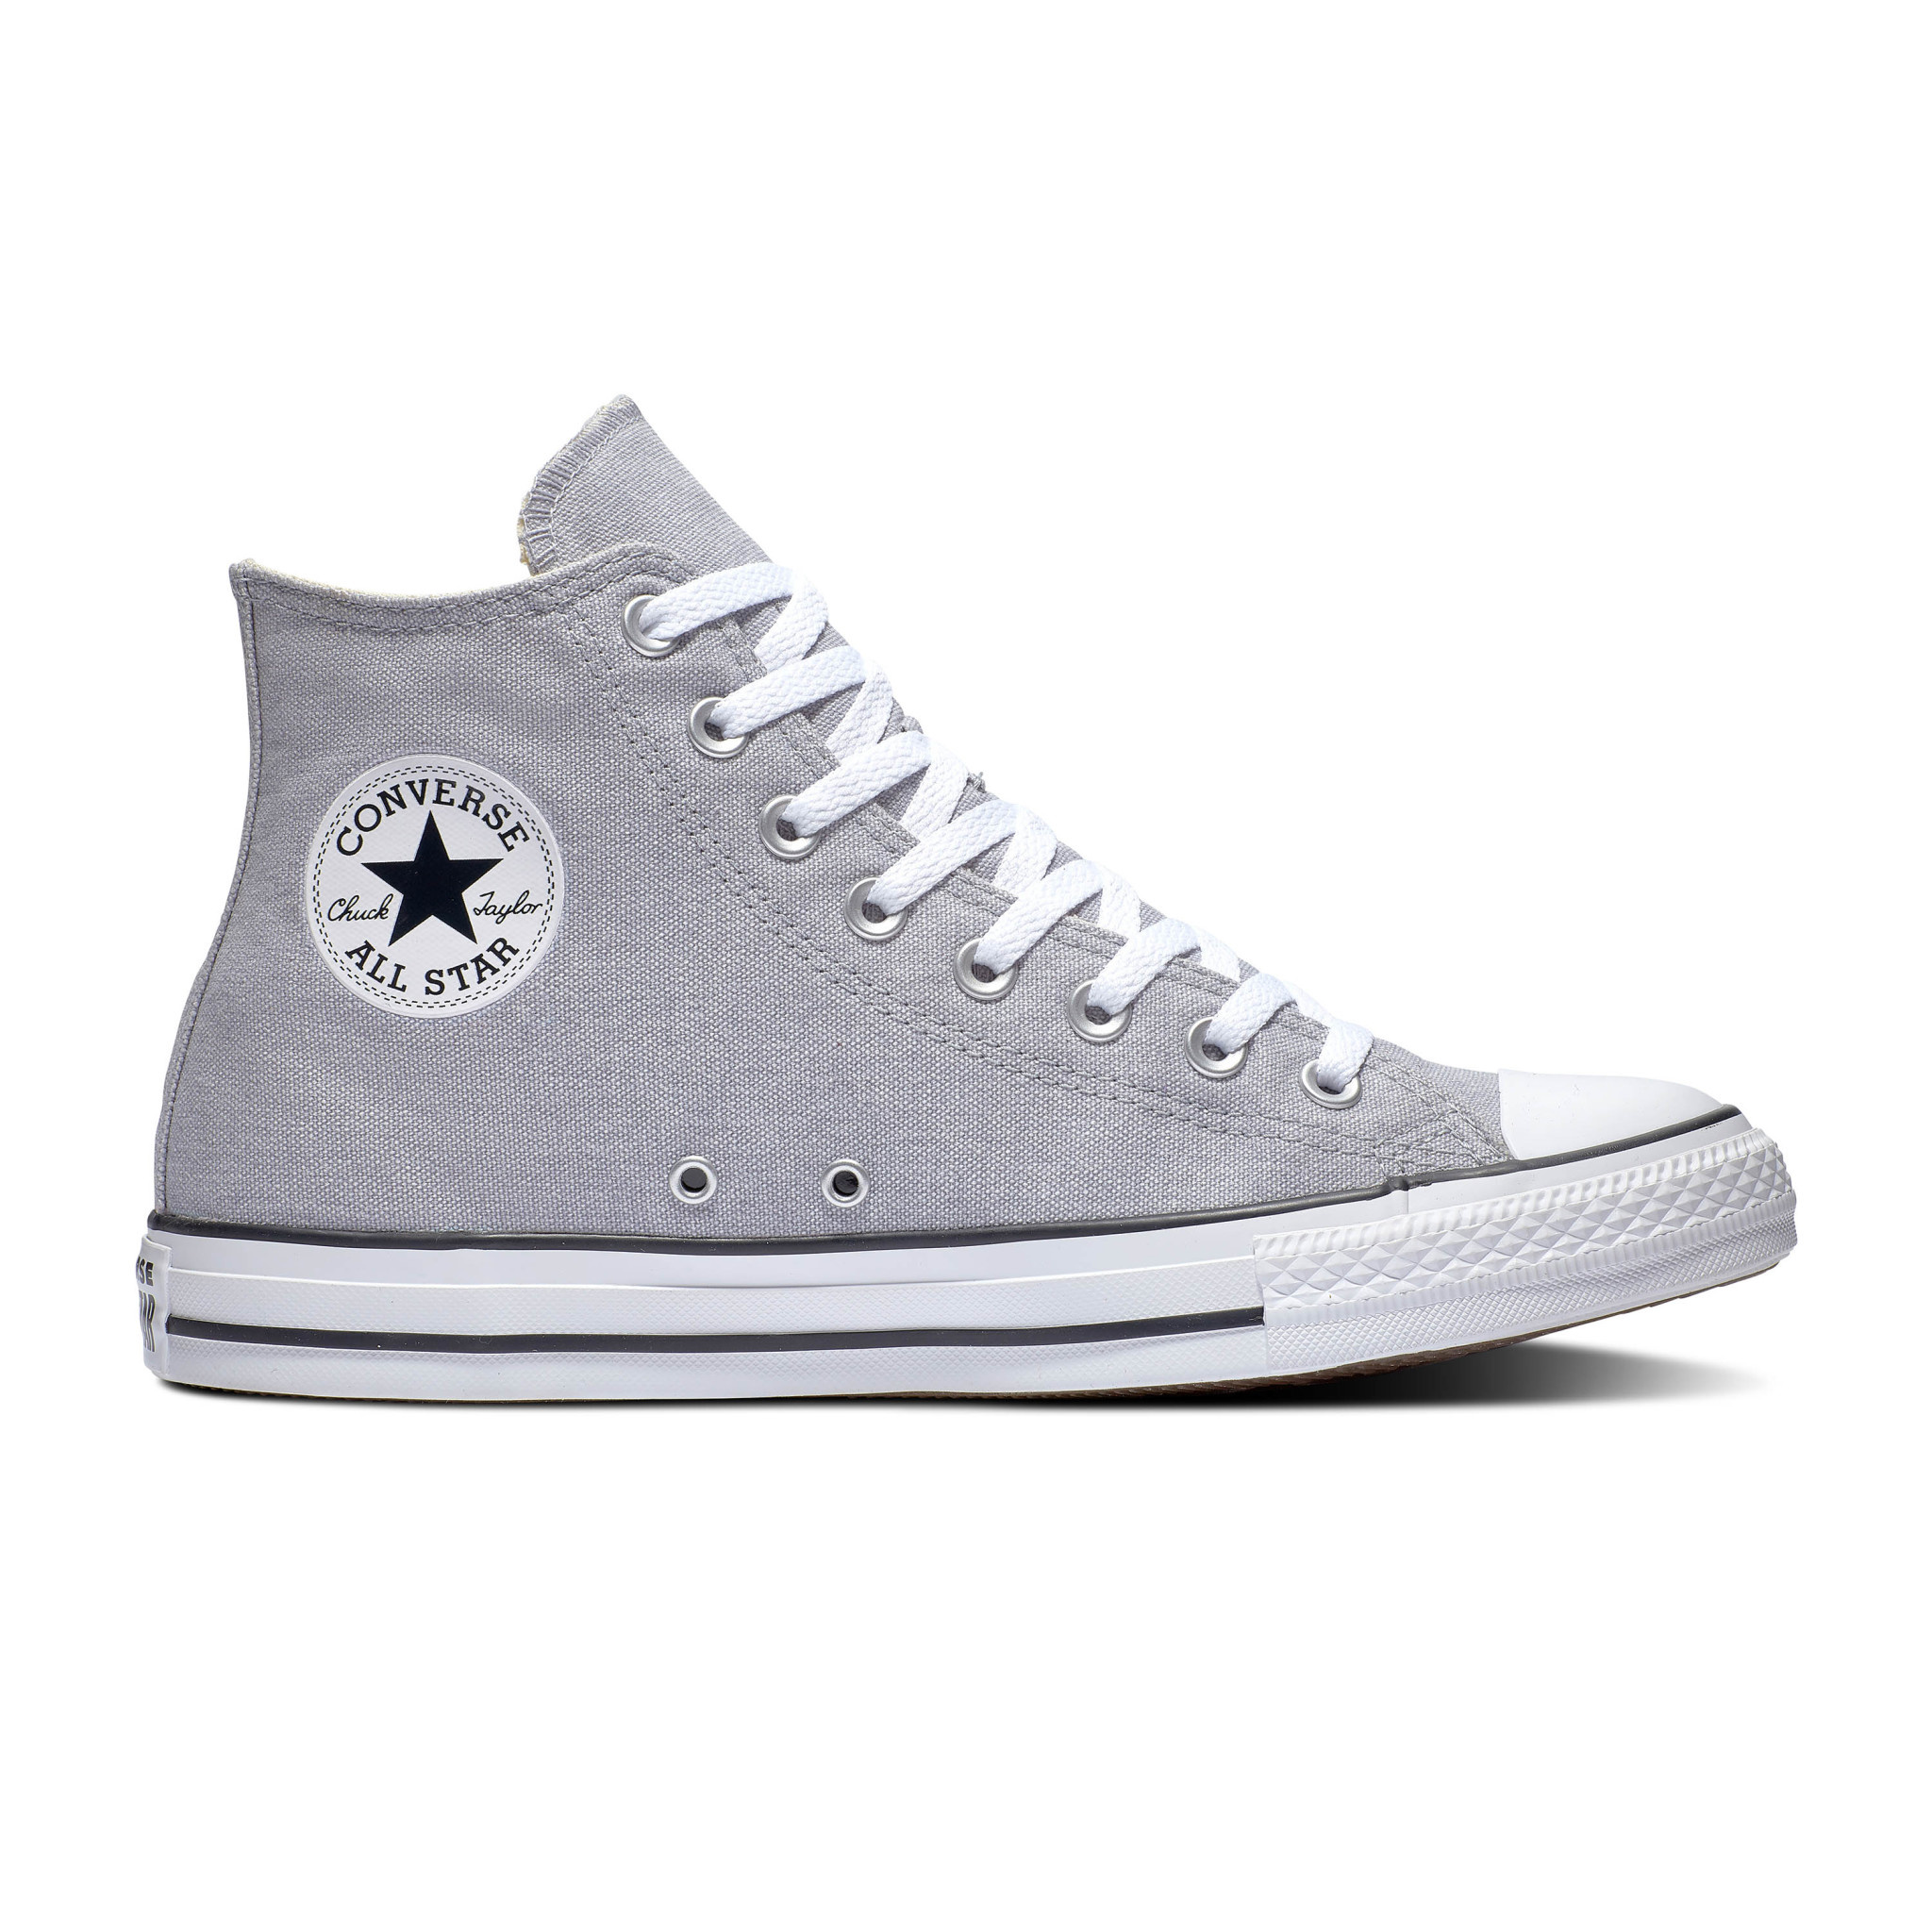 converse shoes grey